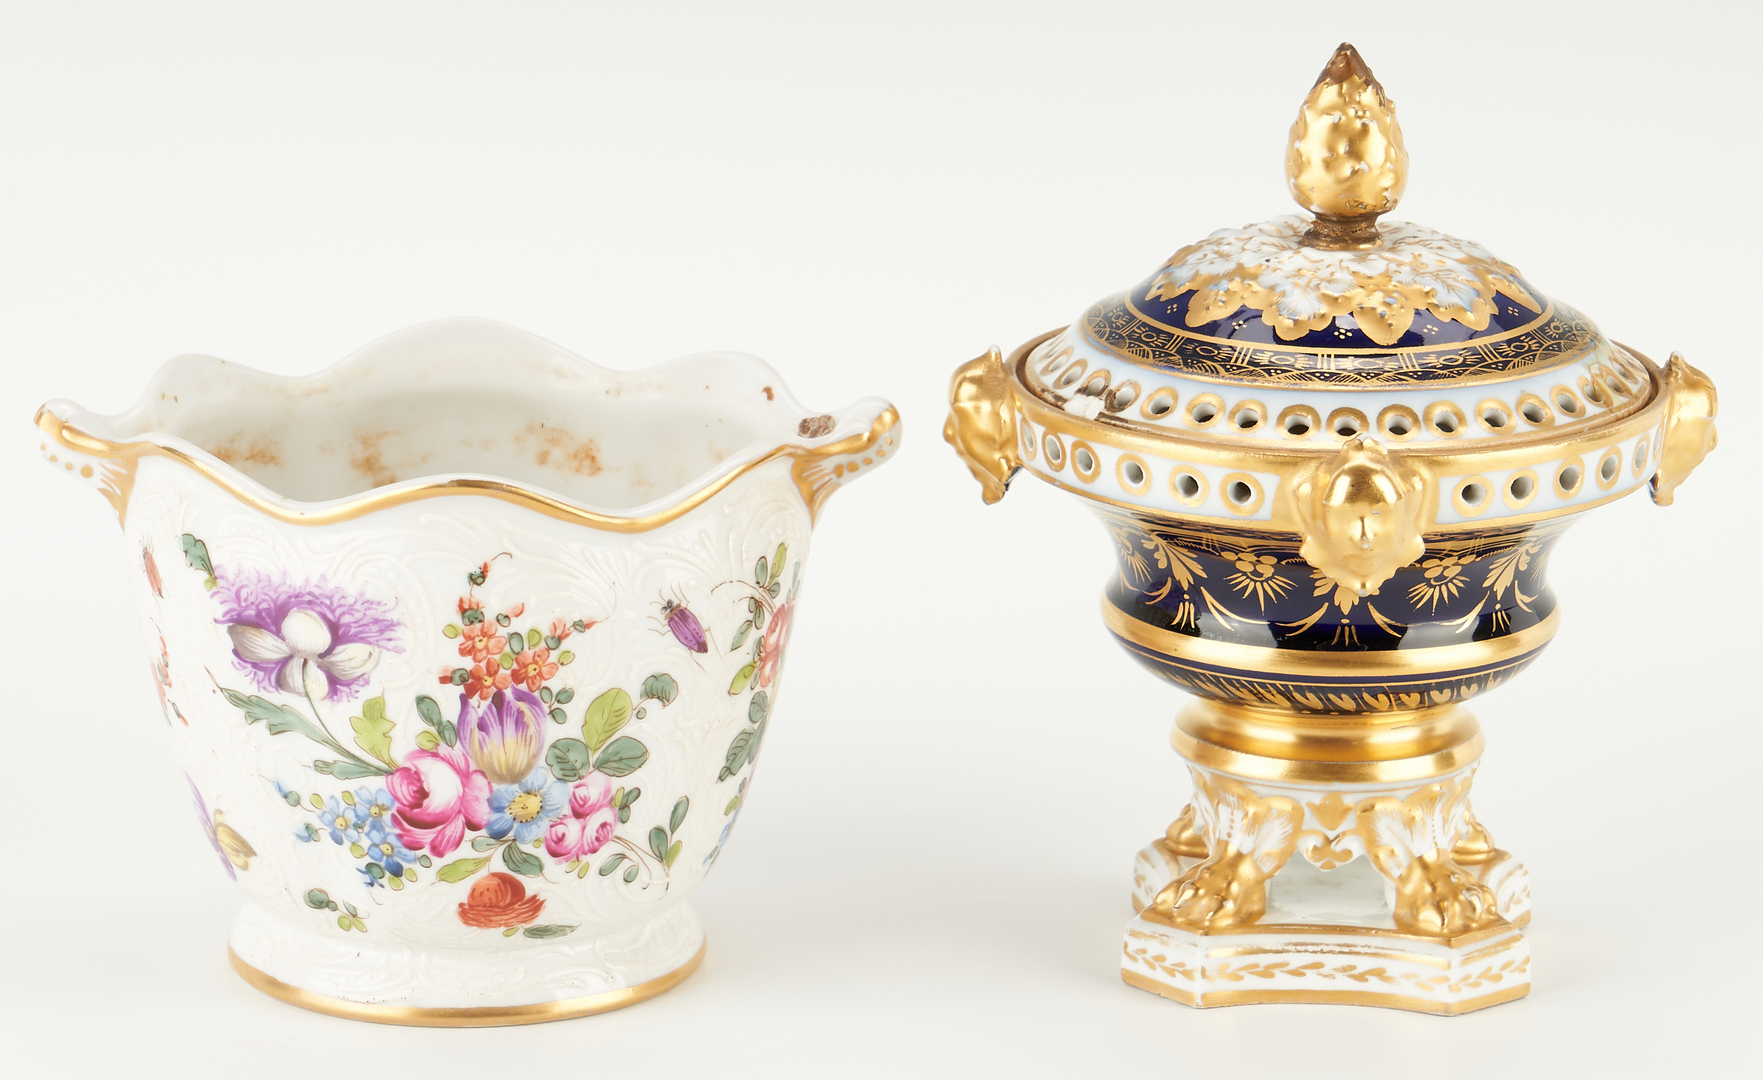 Lot 462: Group of 6 European Porcelain Items